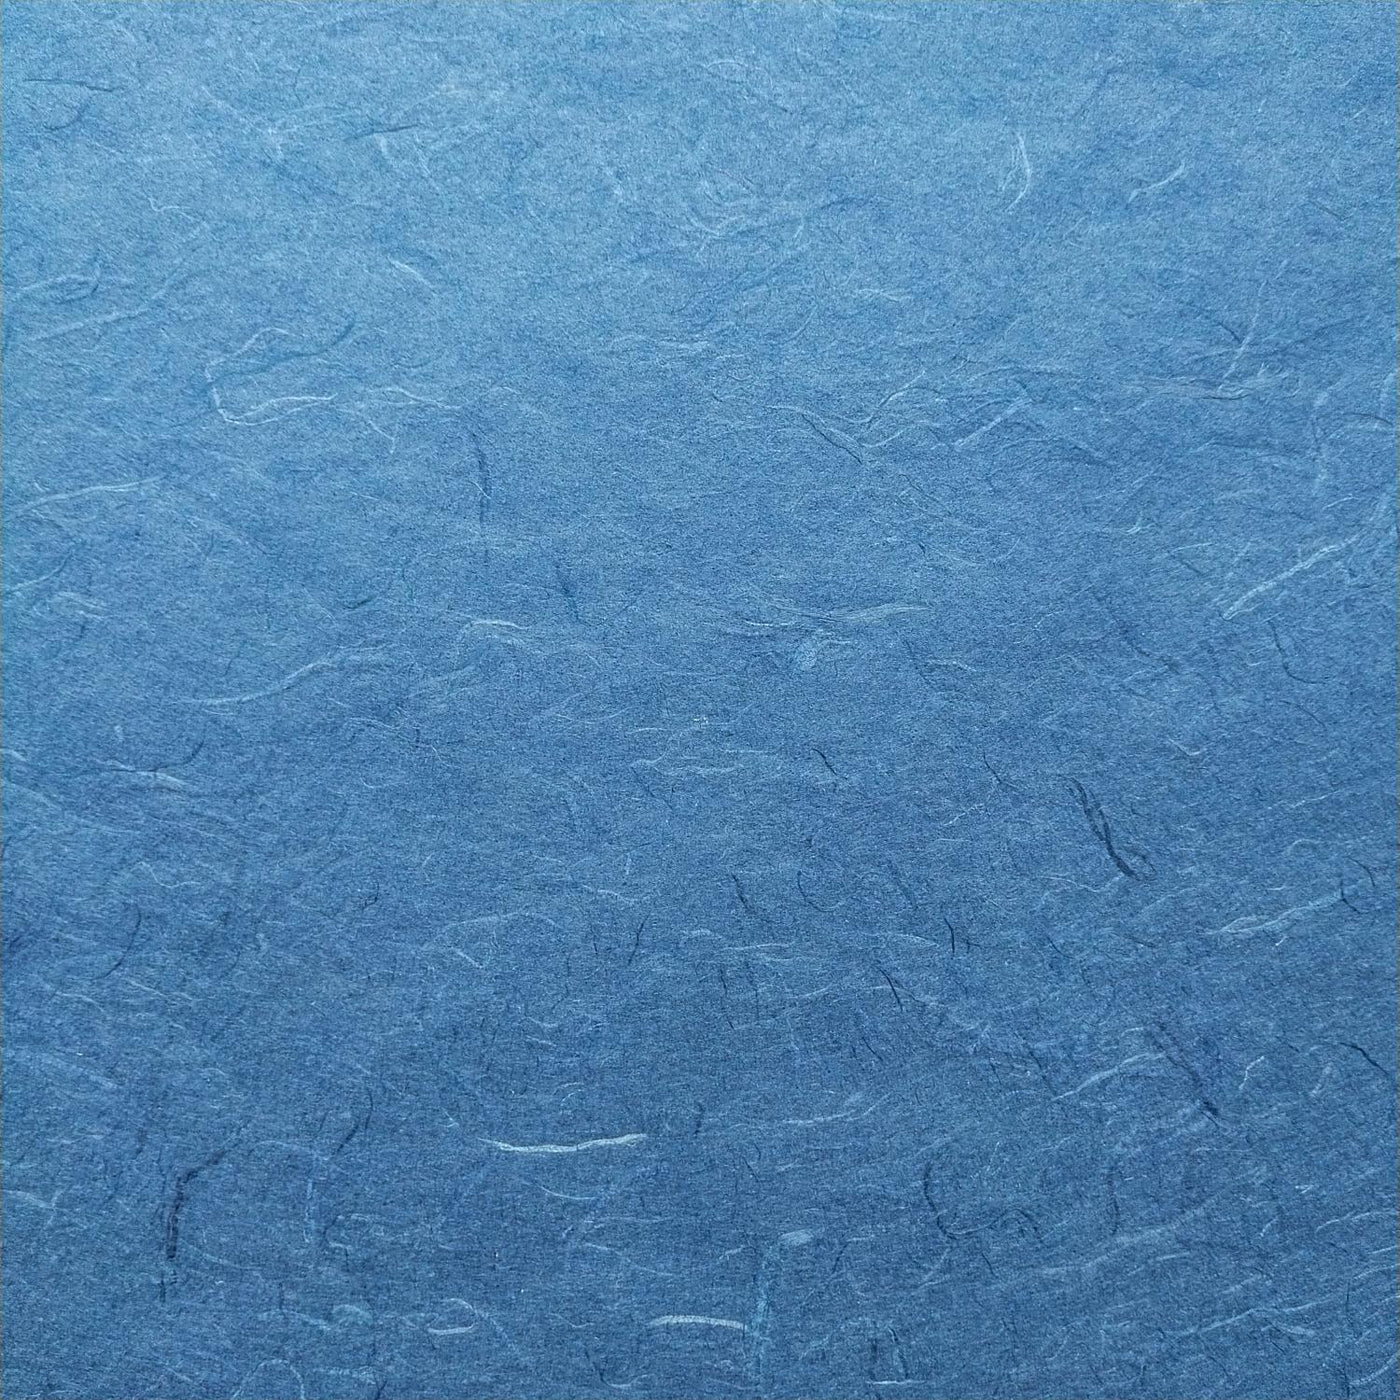 Unryu Kozo Mulberry Paper (Cobalt Blue)